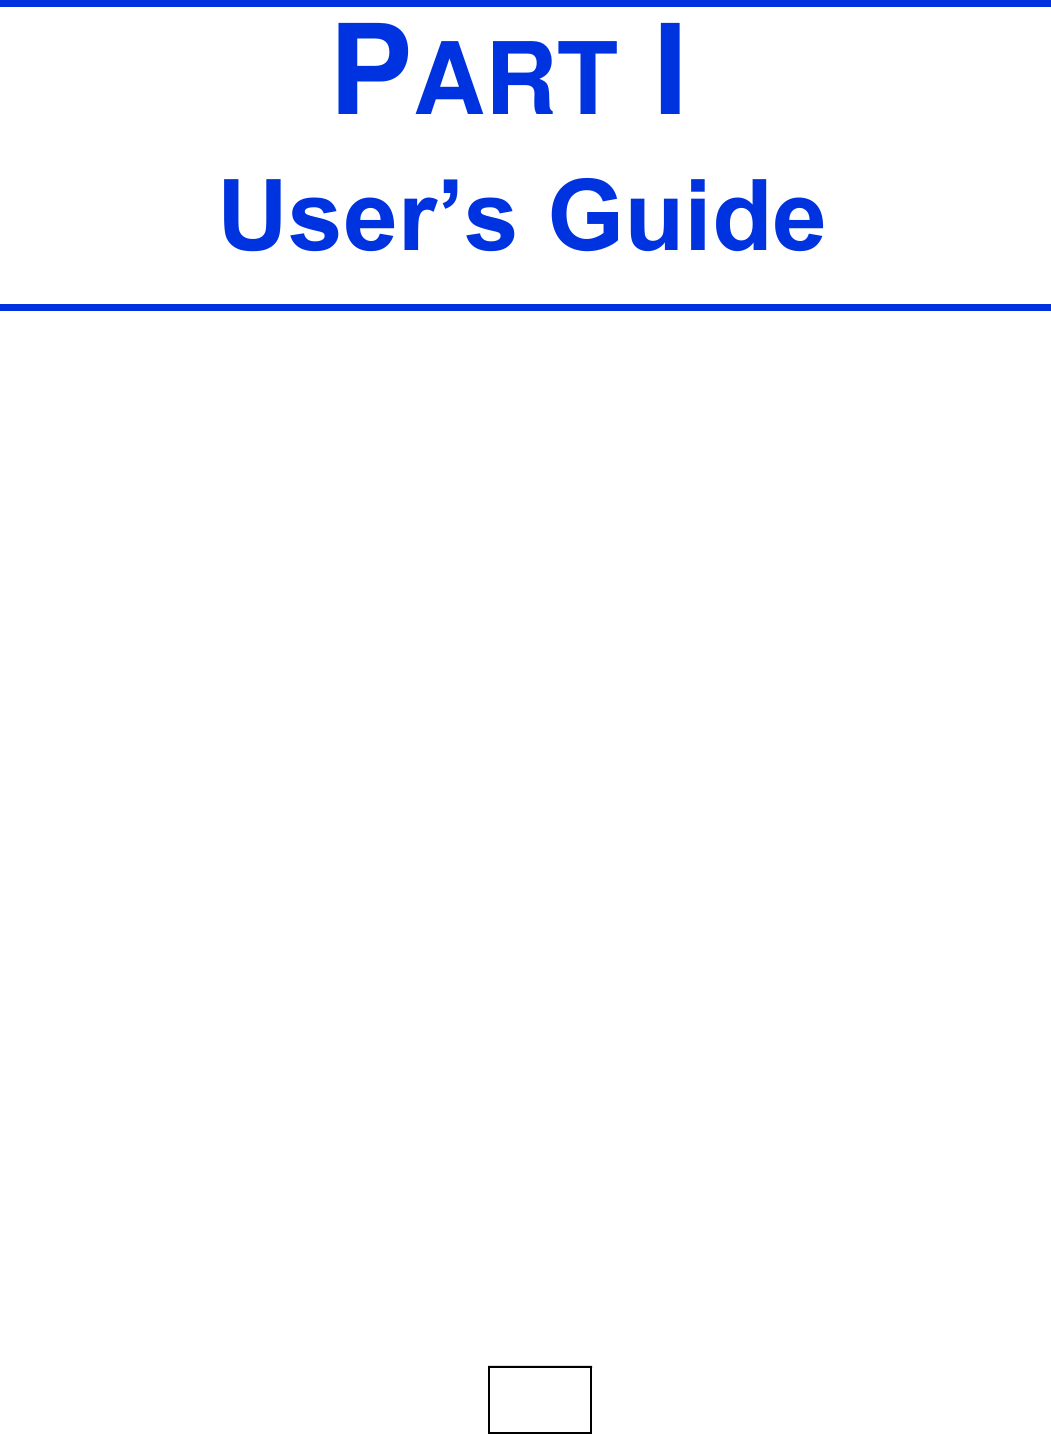  PART I  User’s Guide                                                  